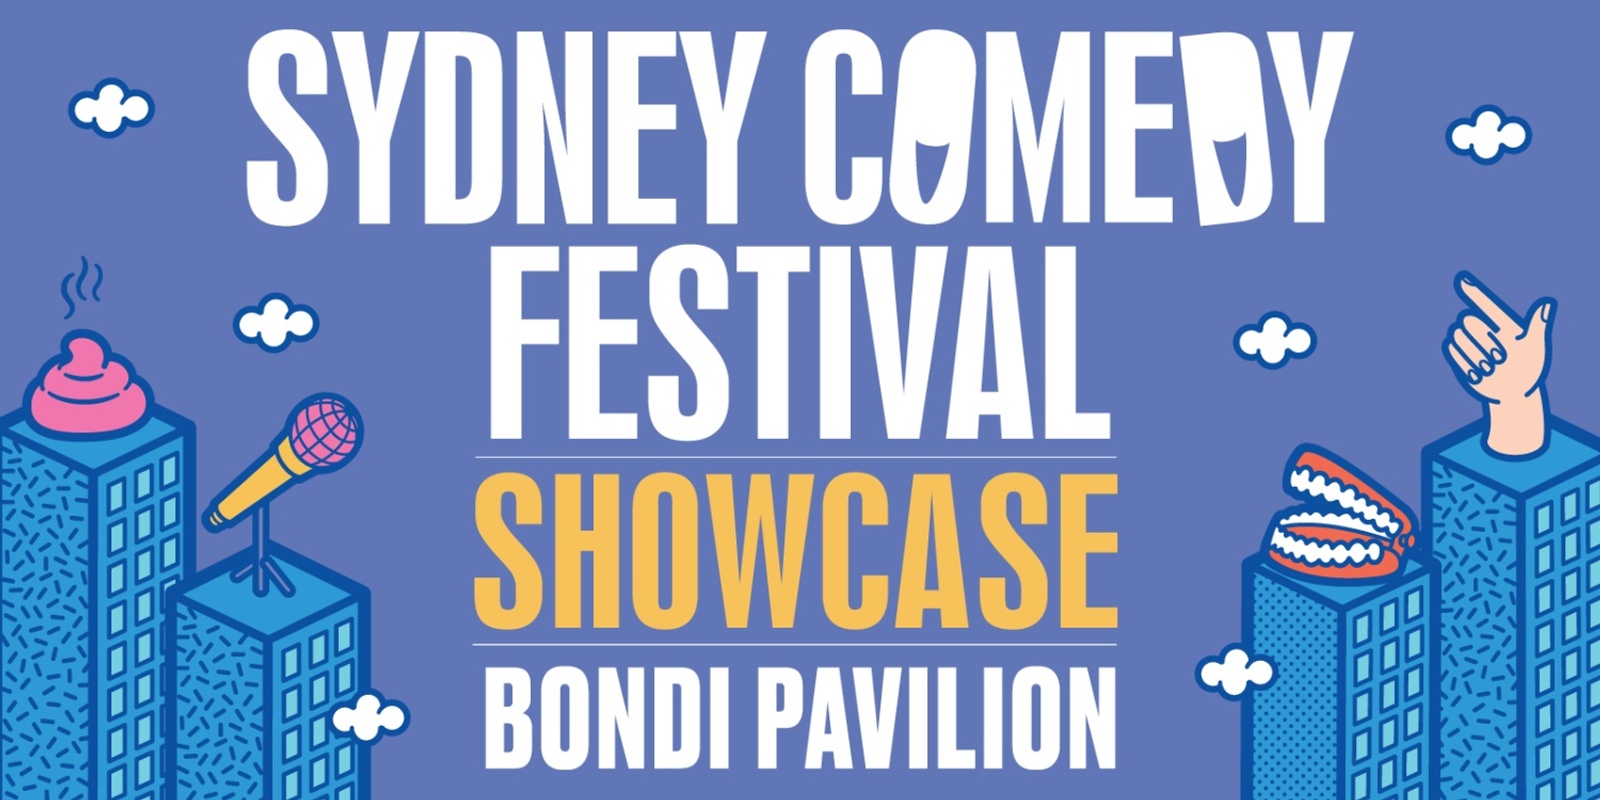 Banner image for Sydney Comedy Festival Showcase